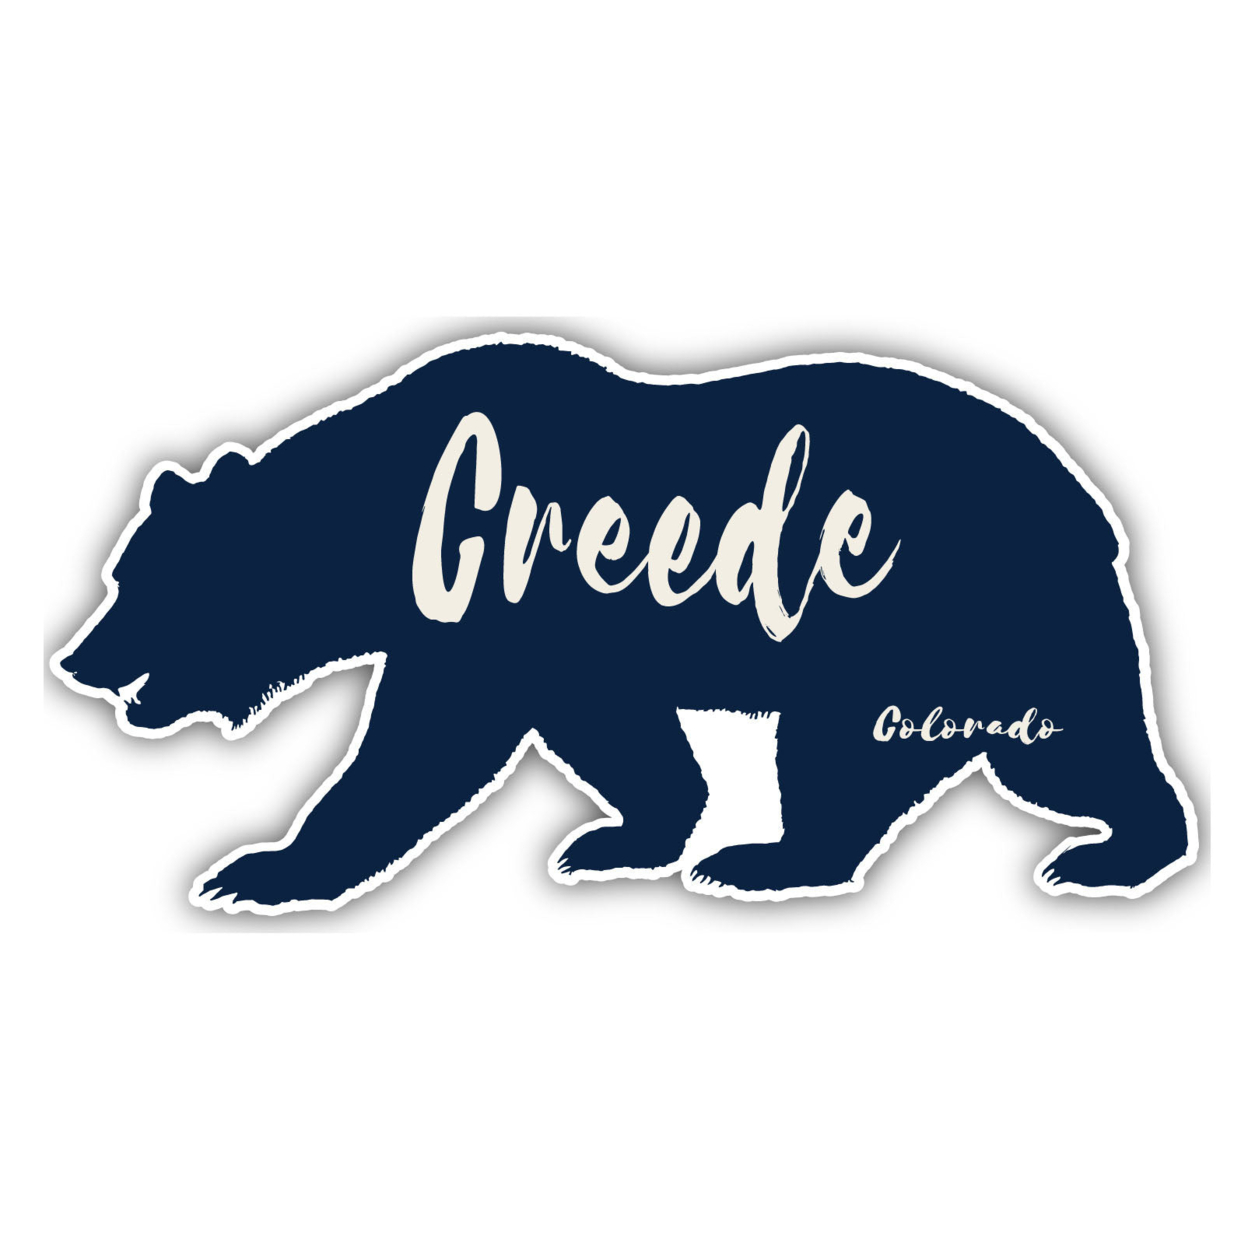 Creede Colorado Souvenir Decorative Stickers (Choose Theme And Size) - Single Unit, 10-Inch, Bear